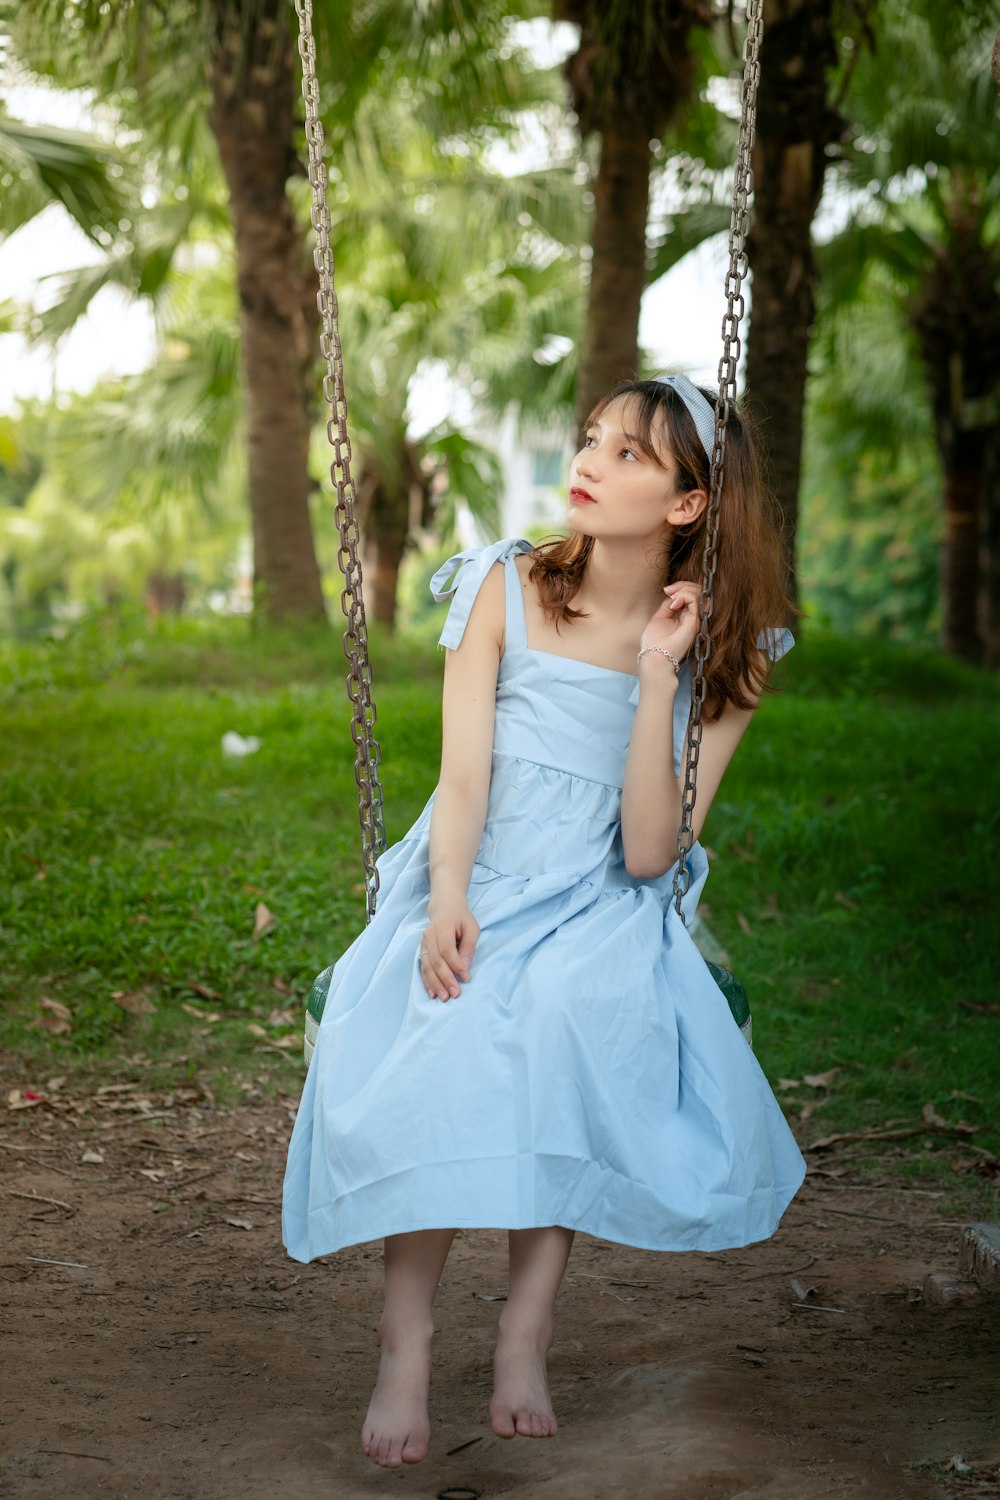 woman in white sleeveless dress sitting on swing during daytime